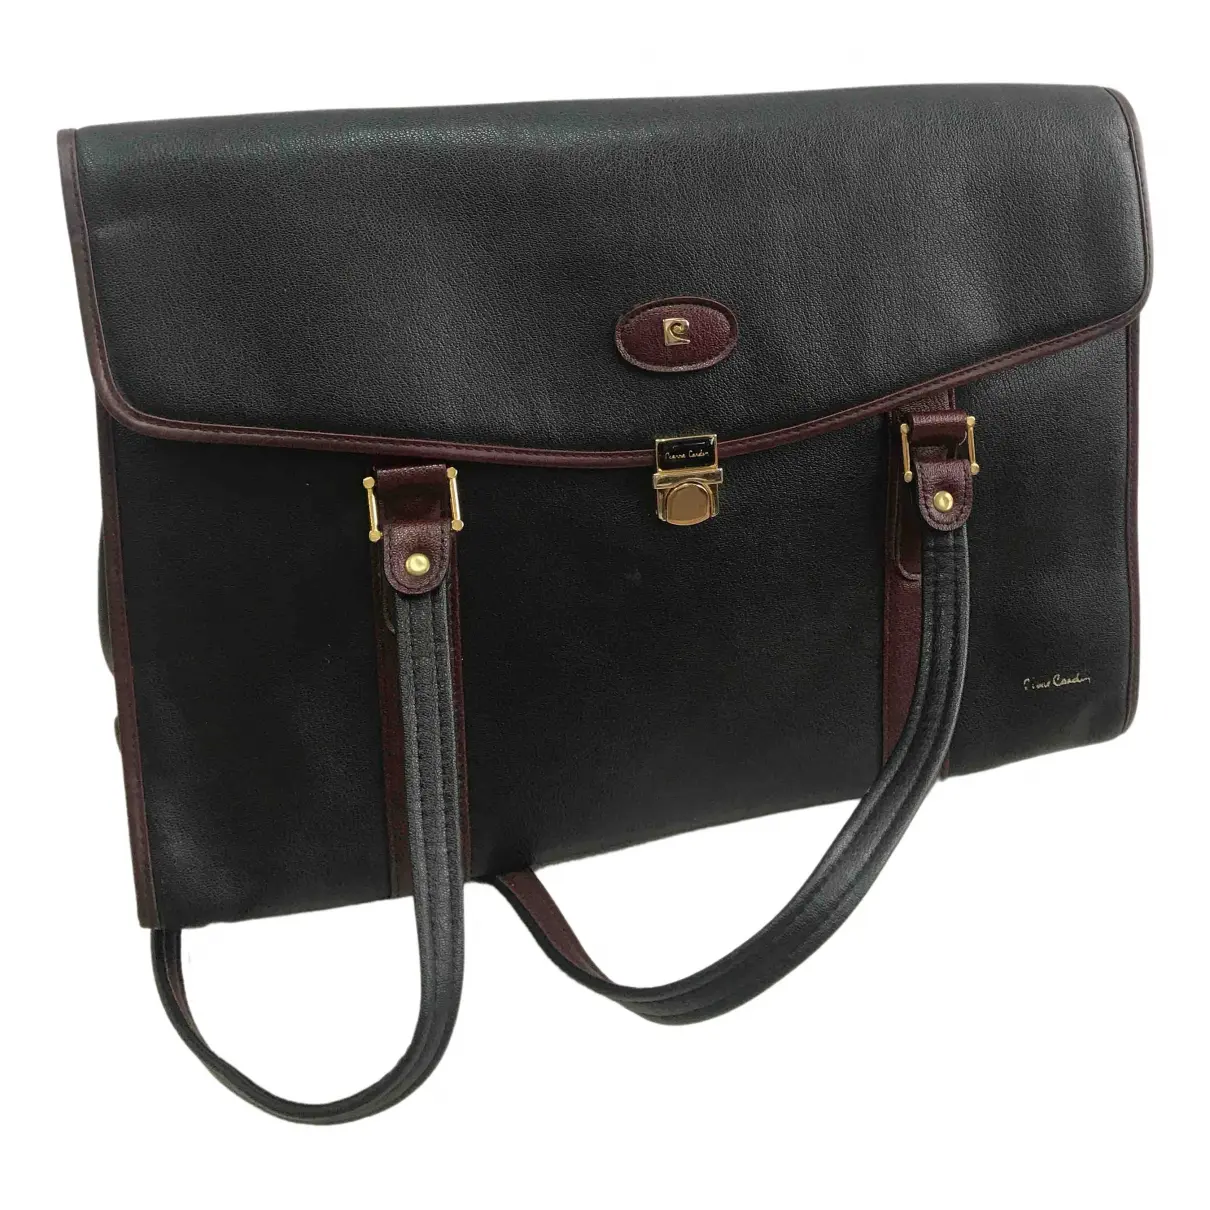 Vegan leather handbag Pierre Cardin - Vintage